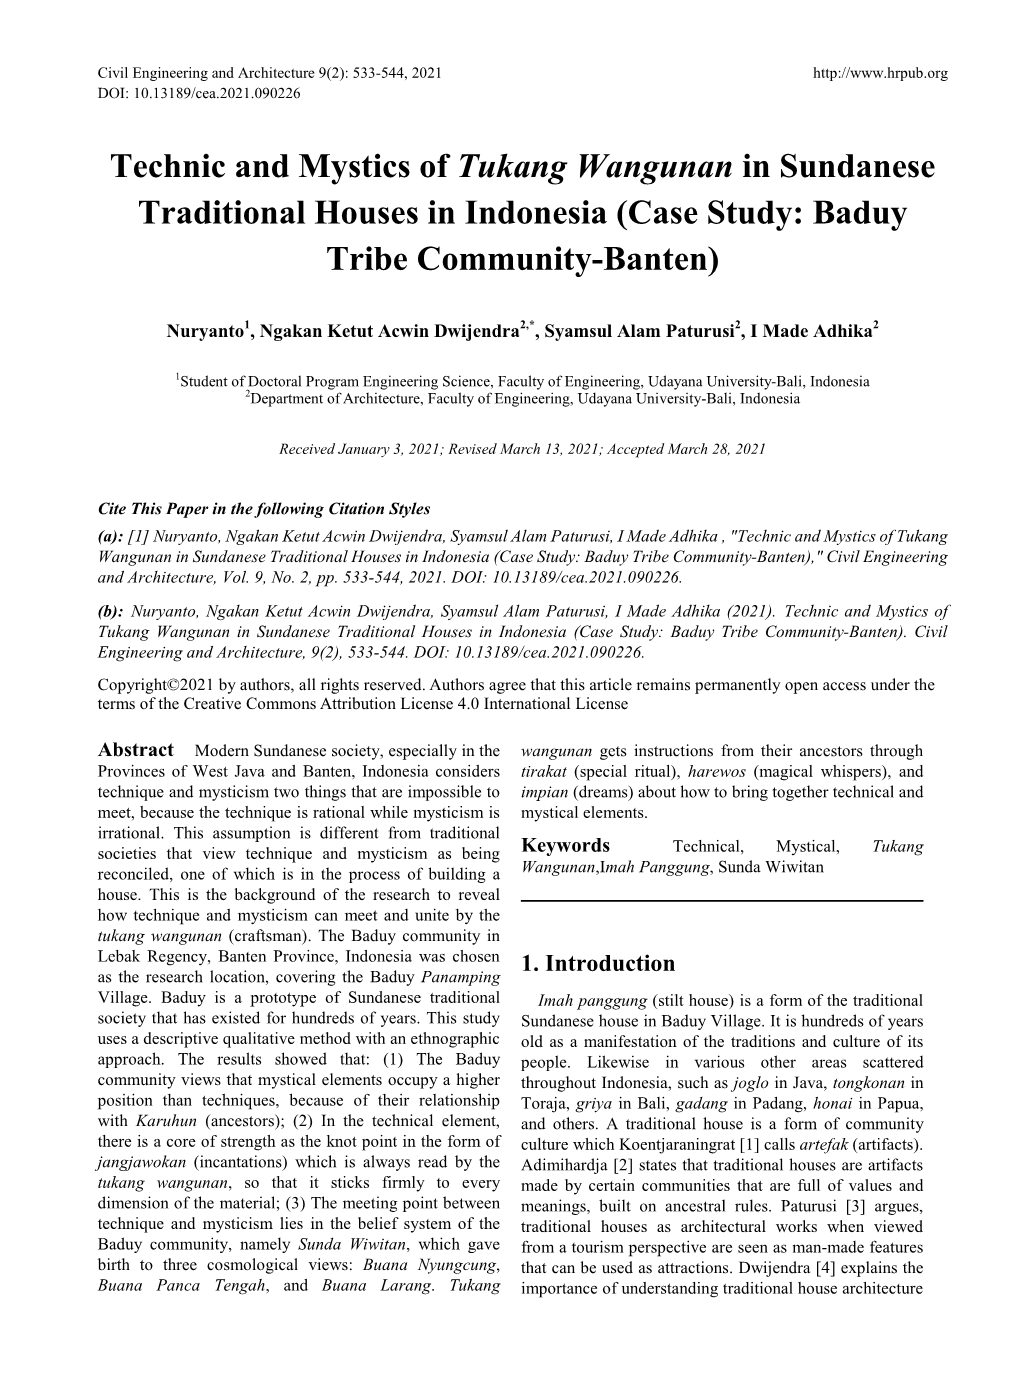 Technic and Mystics of Tukang Wangunan in Sundanese Traditional Houses in Indonesia (Case Study: Baduy Tribe Community-Banten)